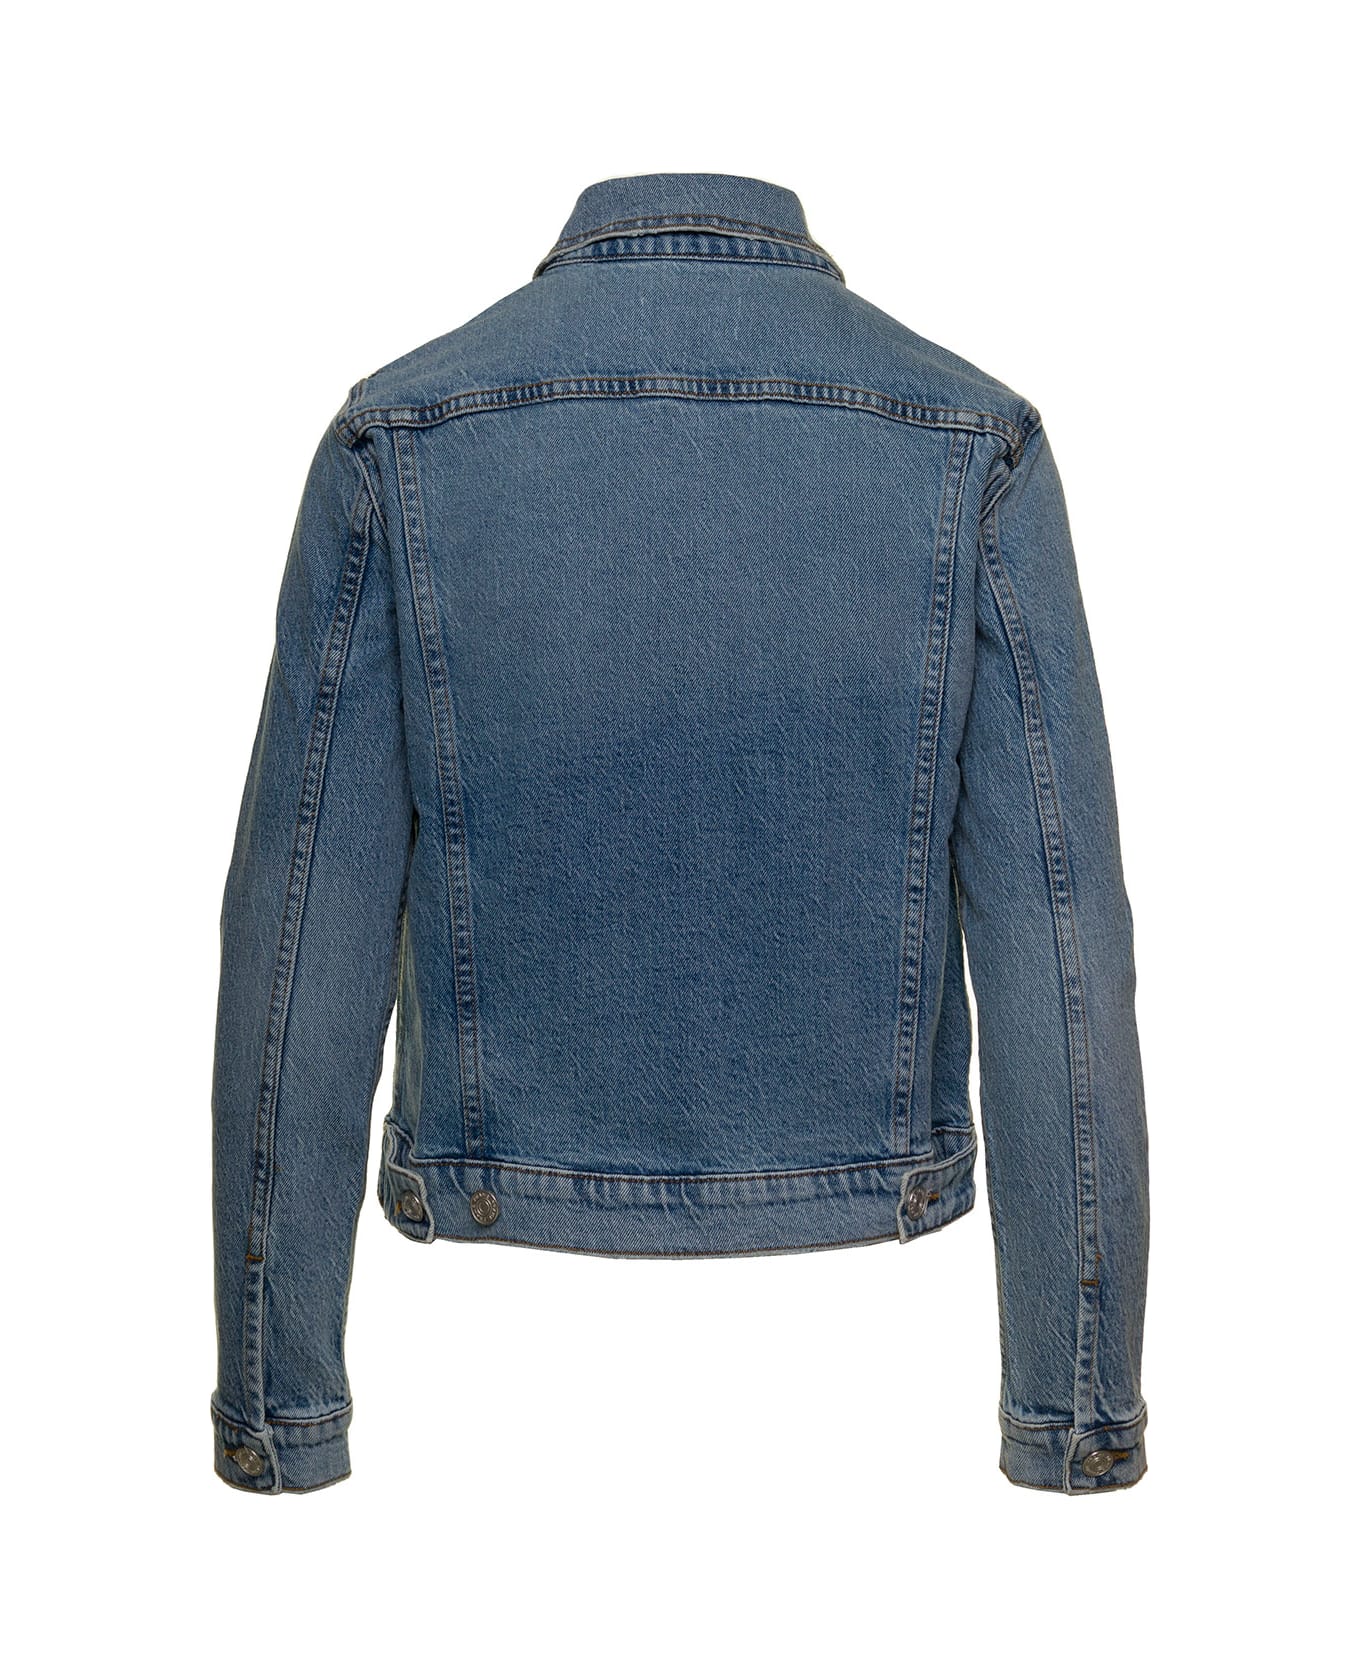 Frame Light Blue Vintage Denim Jacket With Patch Pockets In Cotton Woman - DENIM